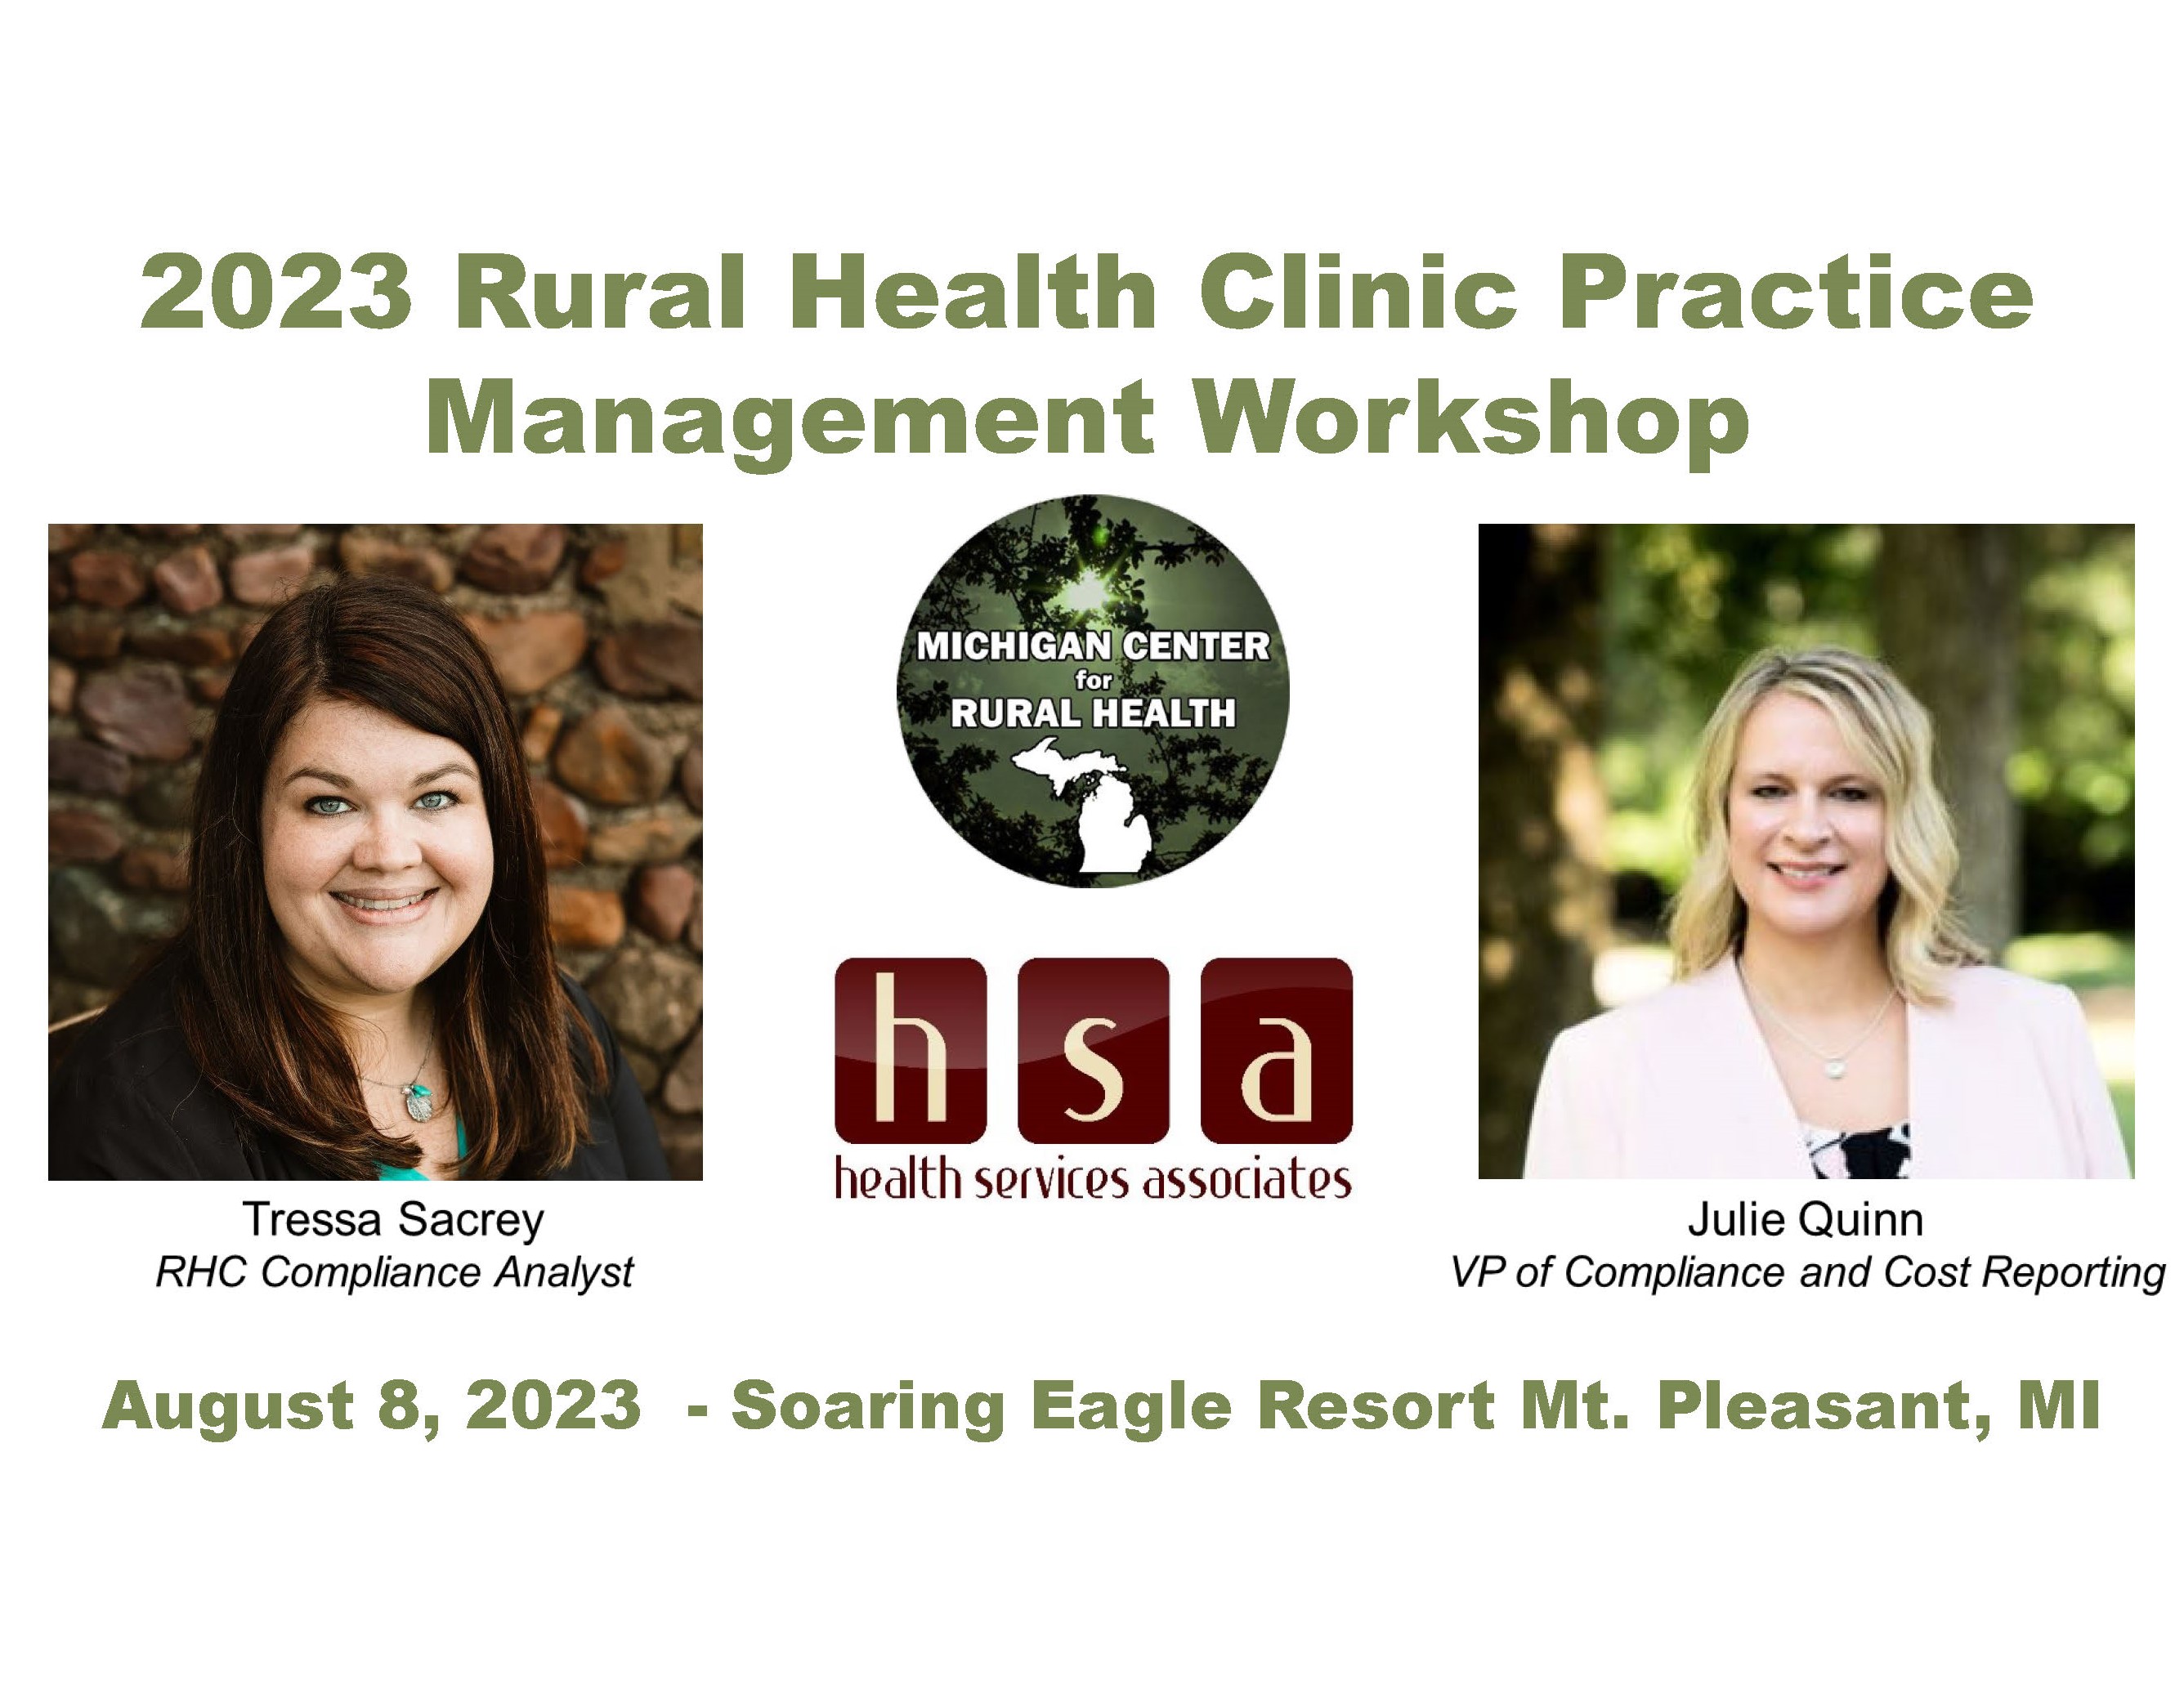 2023 Rural Health Clinic Practice Management Workshop flyer